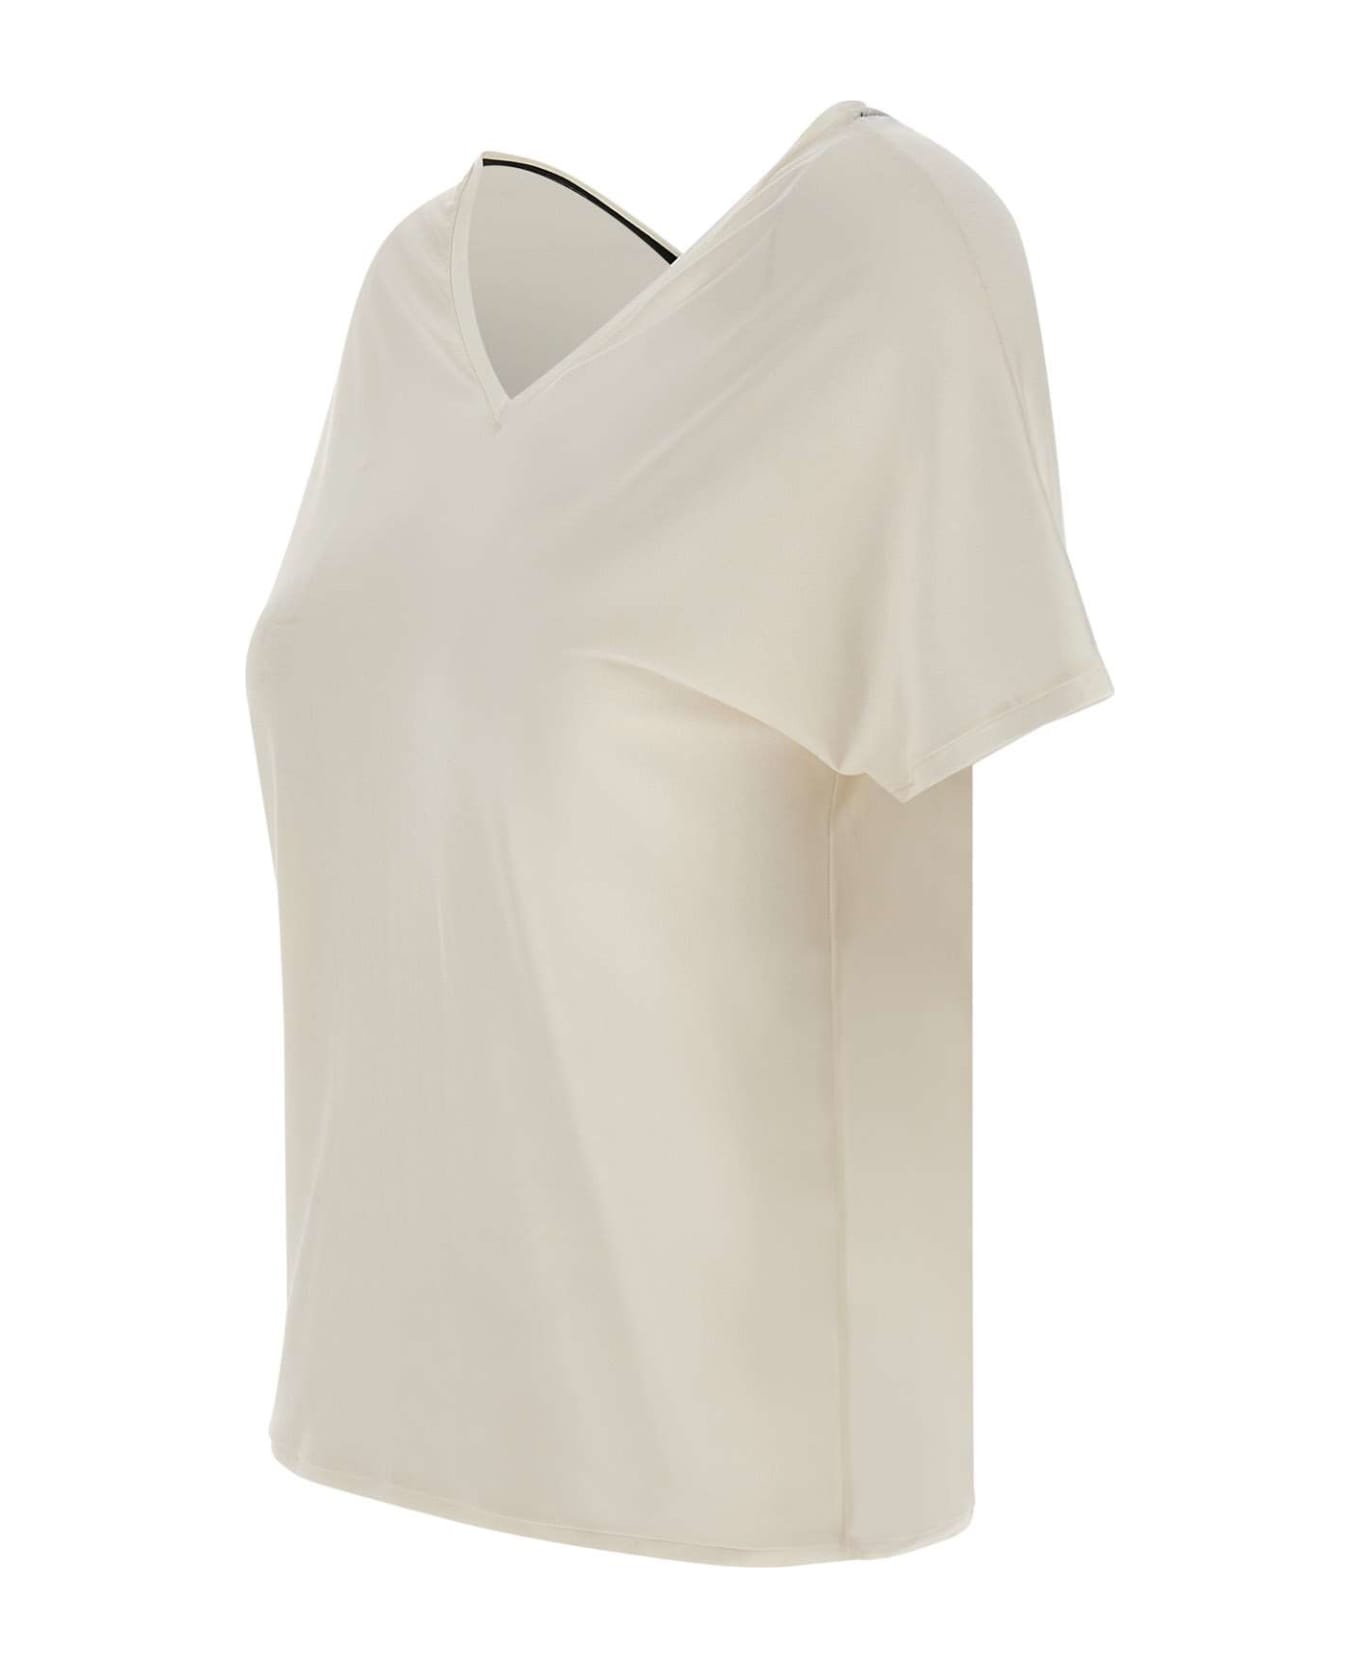 RRD - Roberto Ricci Design Cupro Fabric T-shirt T-shirt - WHITE